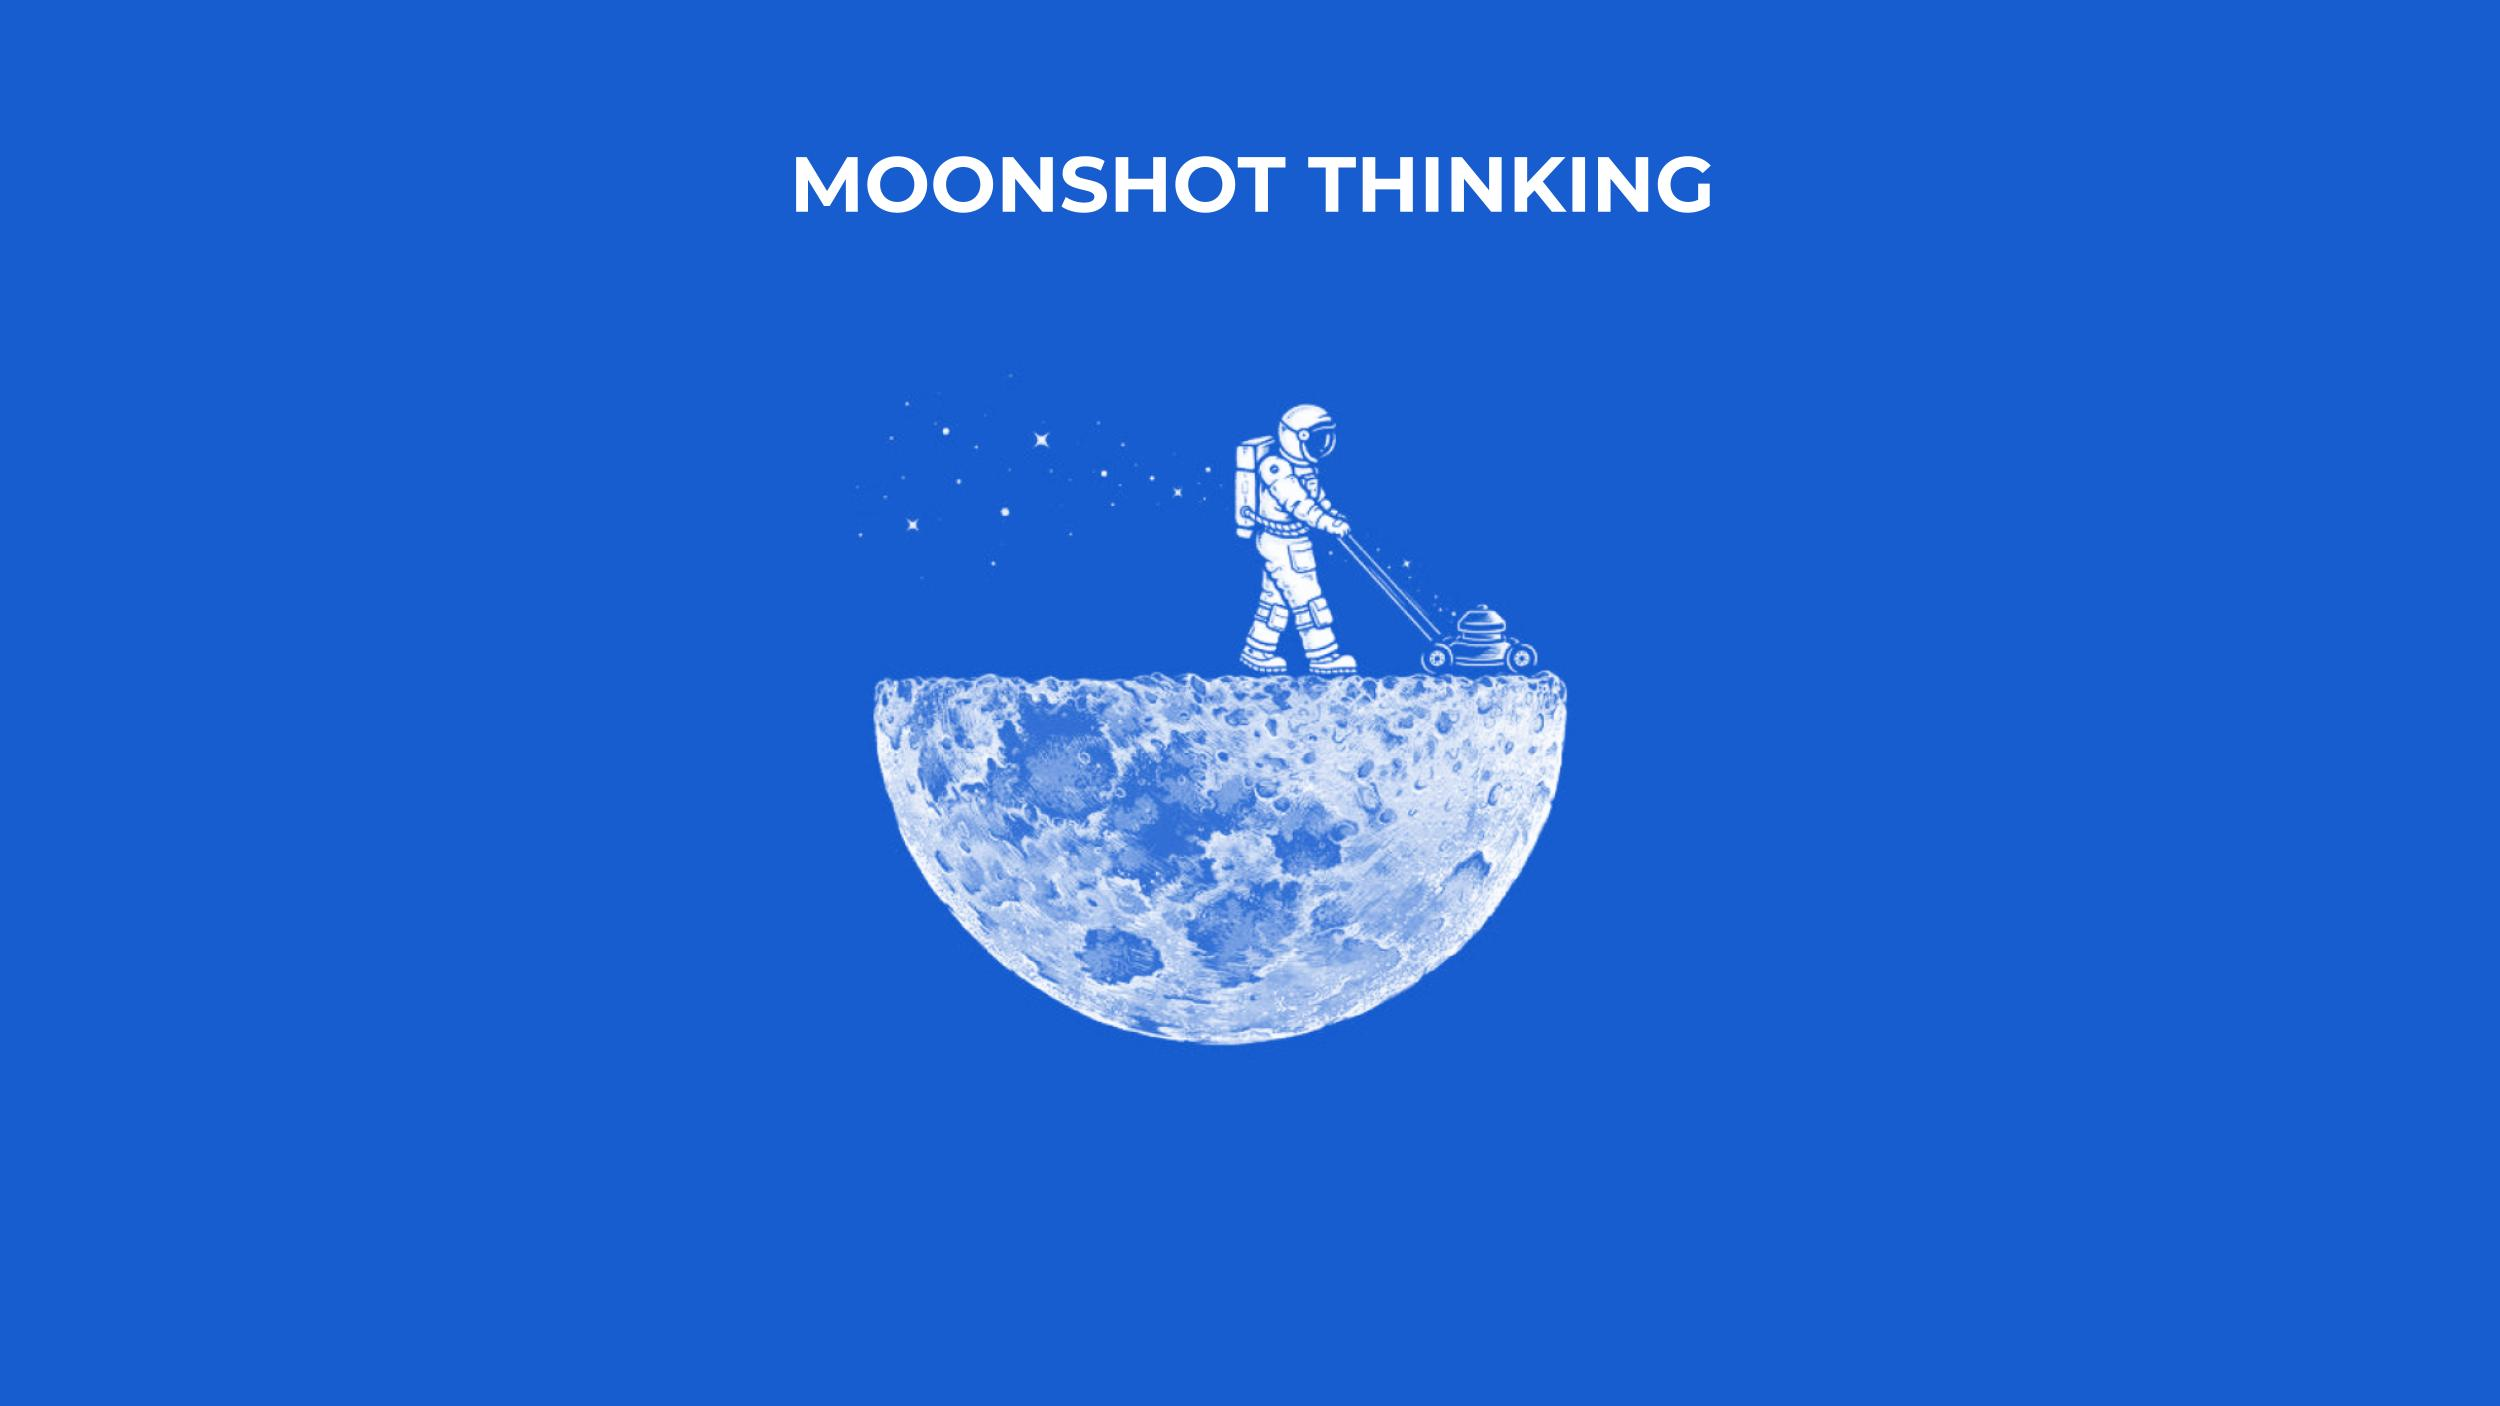 Moonshot thinking to set ambitious objectives.